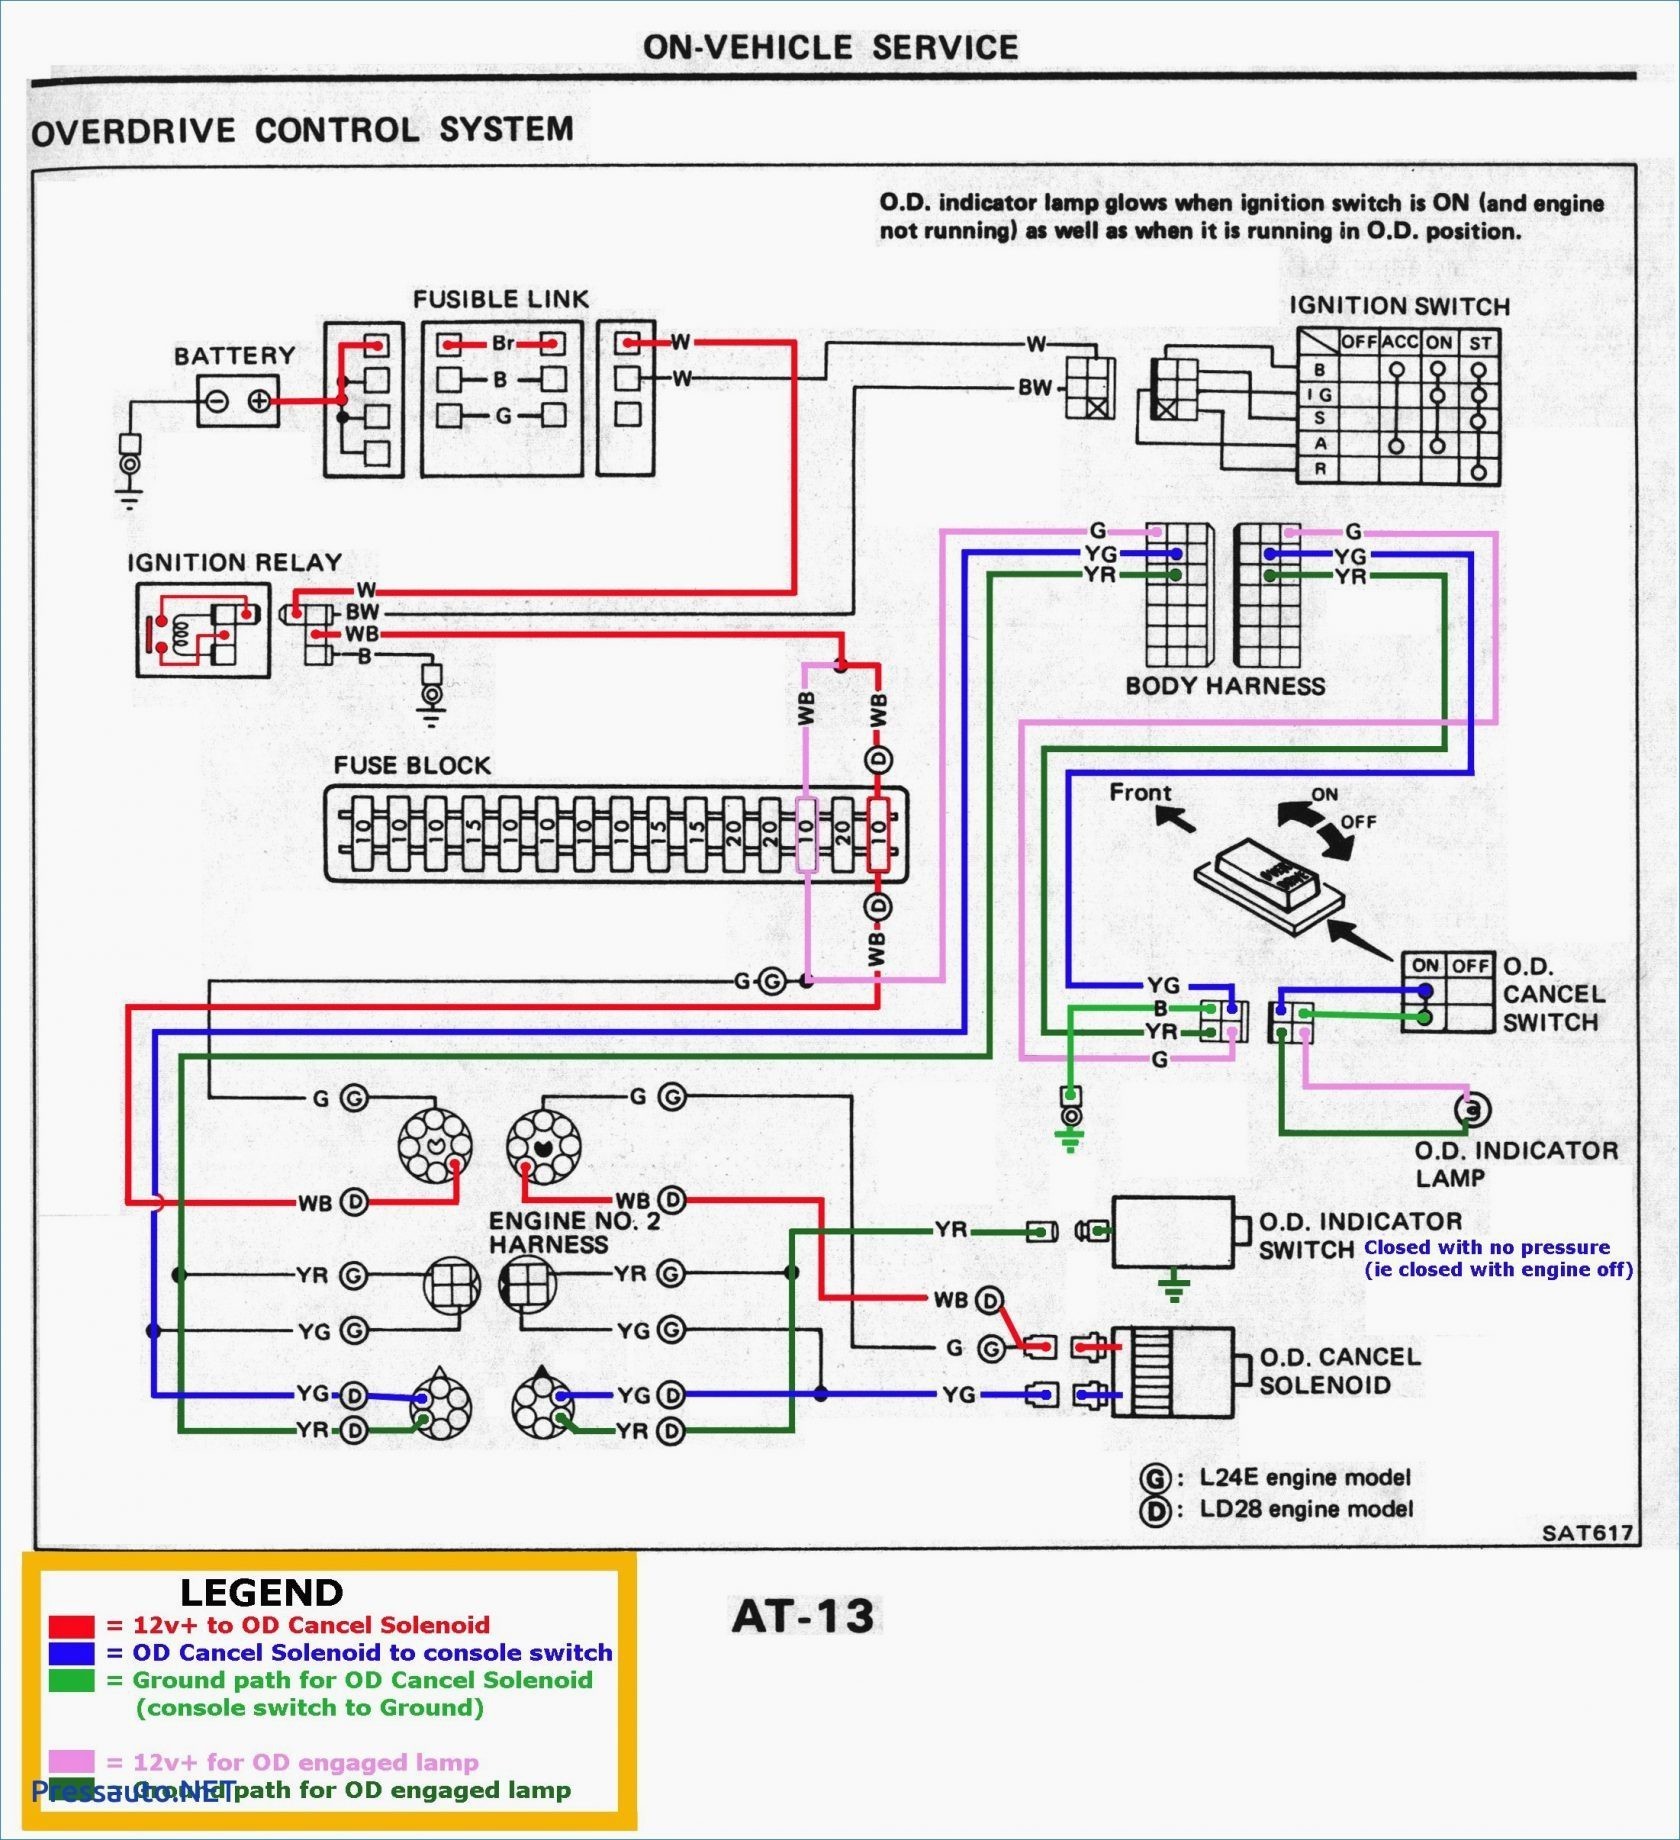 Power Steering assembly Diagram Wiring Diagram Power Wiring Diagram toolbox Of Power Steering assembly Diagram